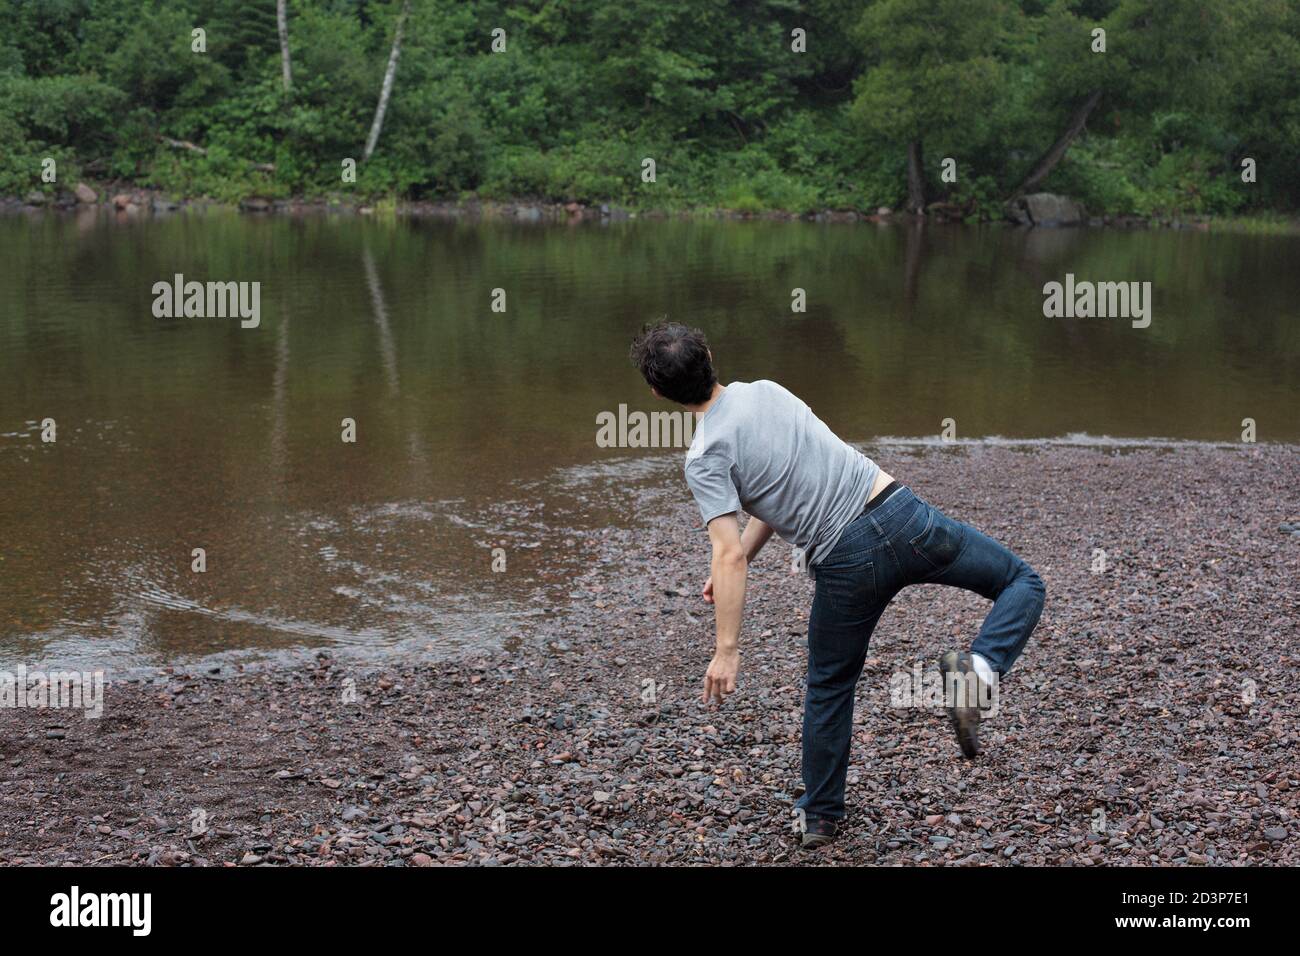 A young man throwing a rock into a lake. Stock Photo